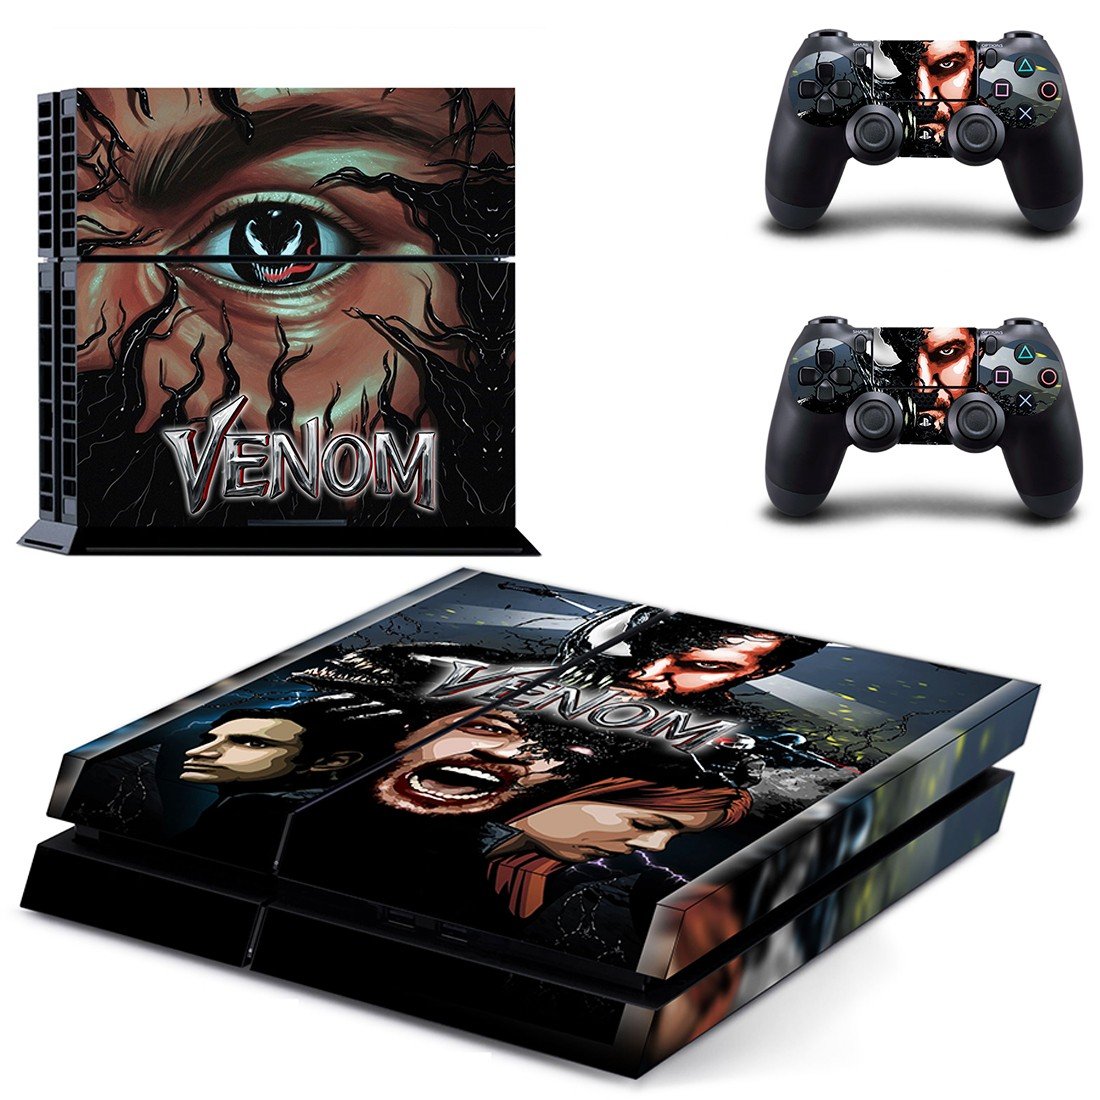 Venom Cover For PlayStation 4